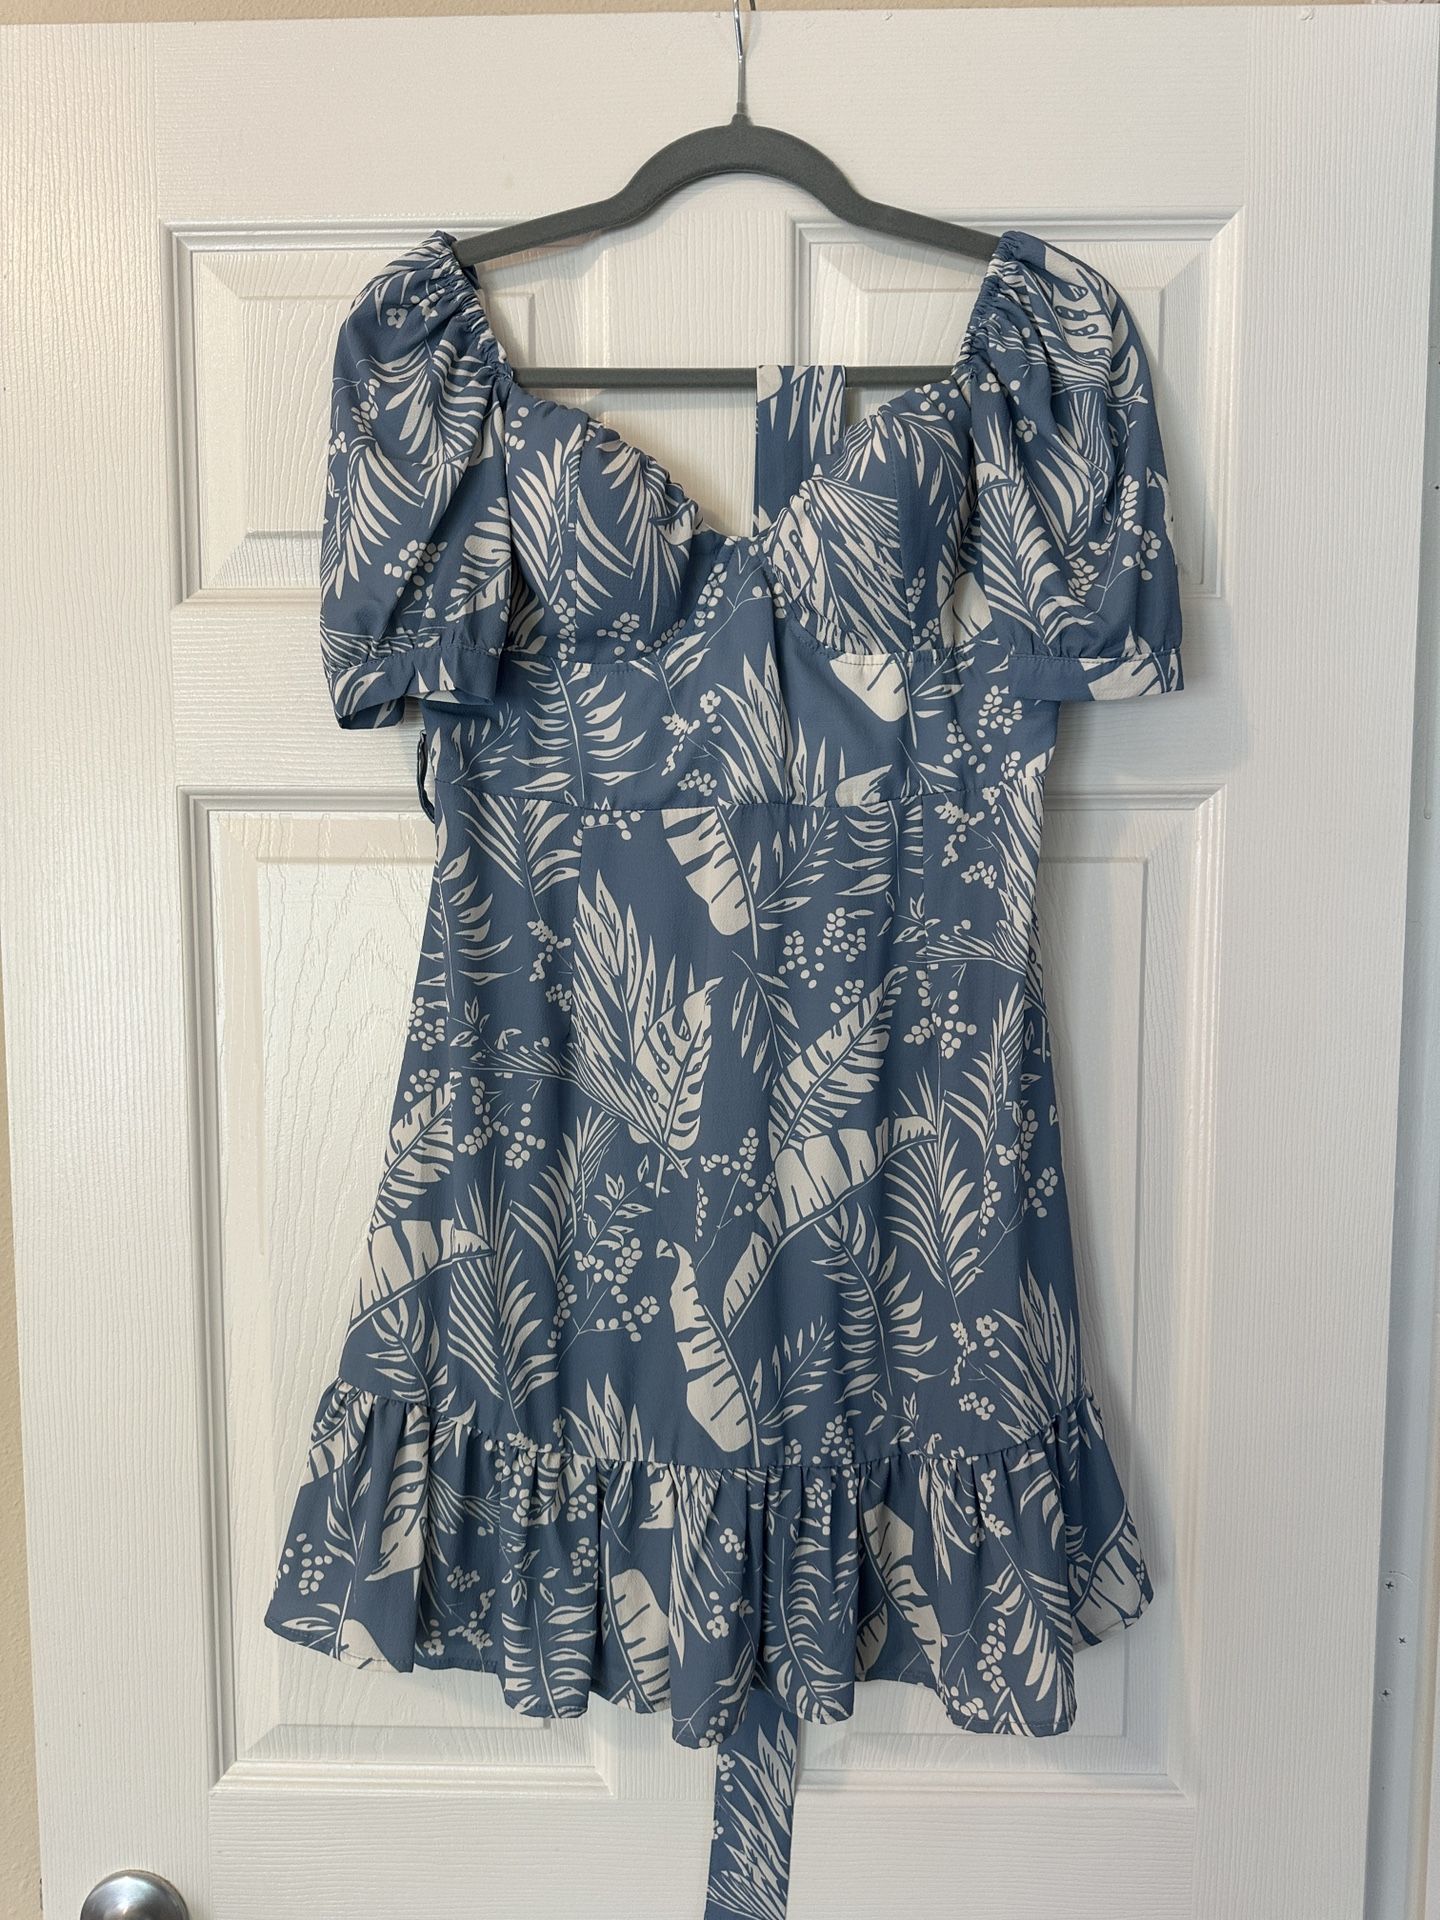 Brand New Summer Dress Size M